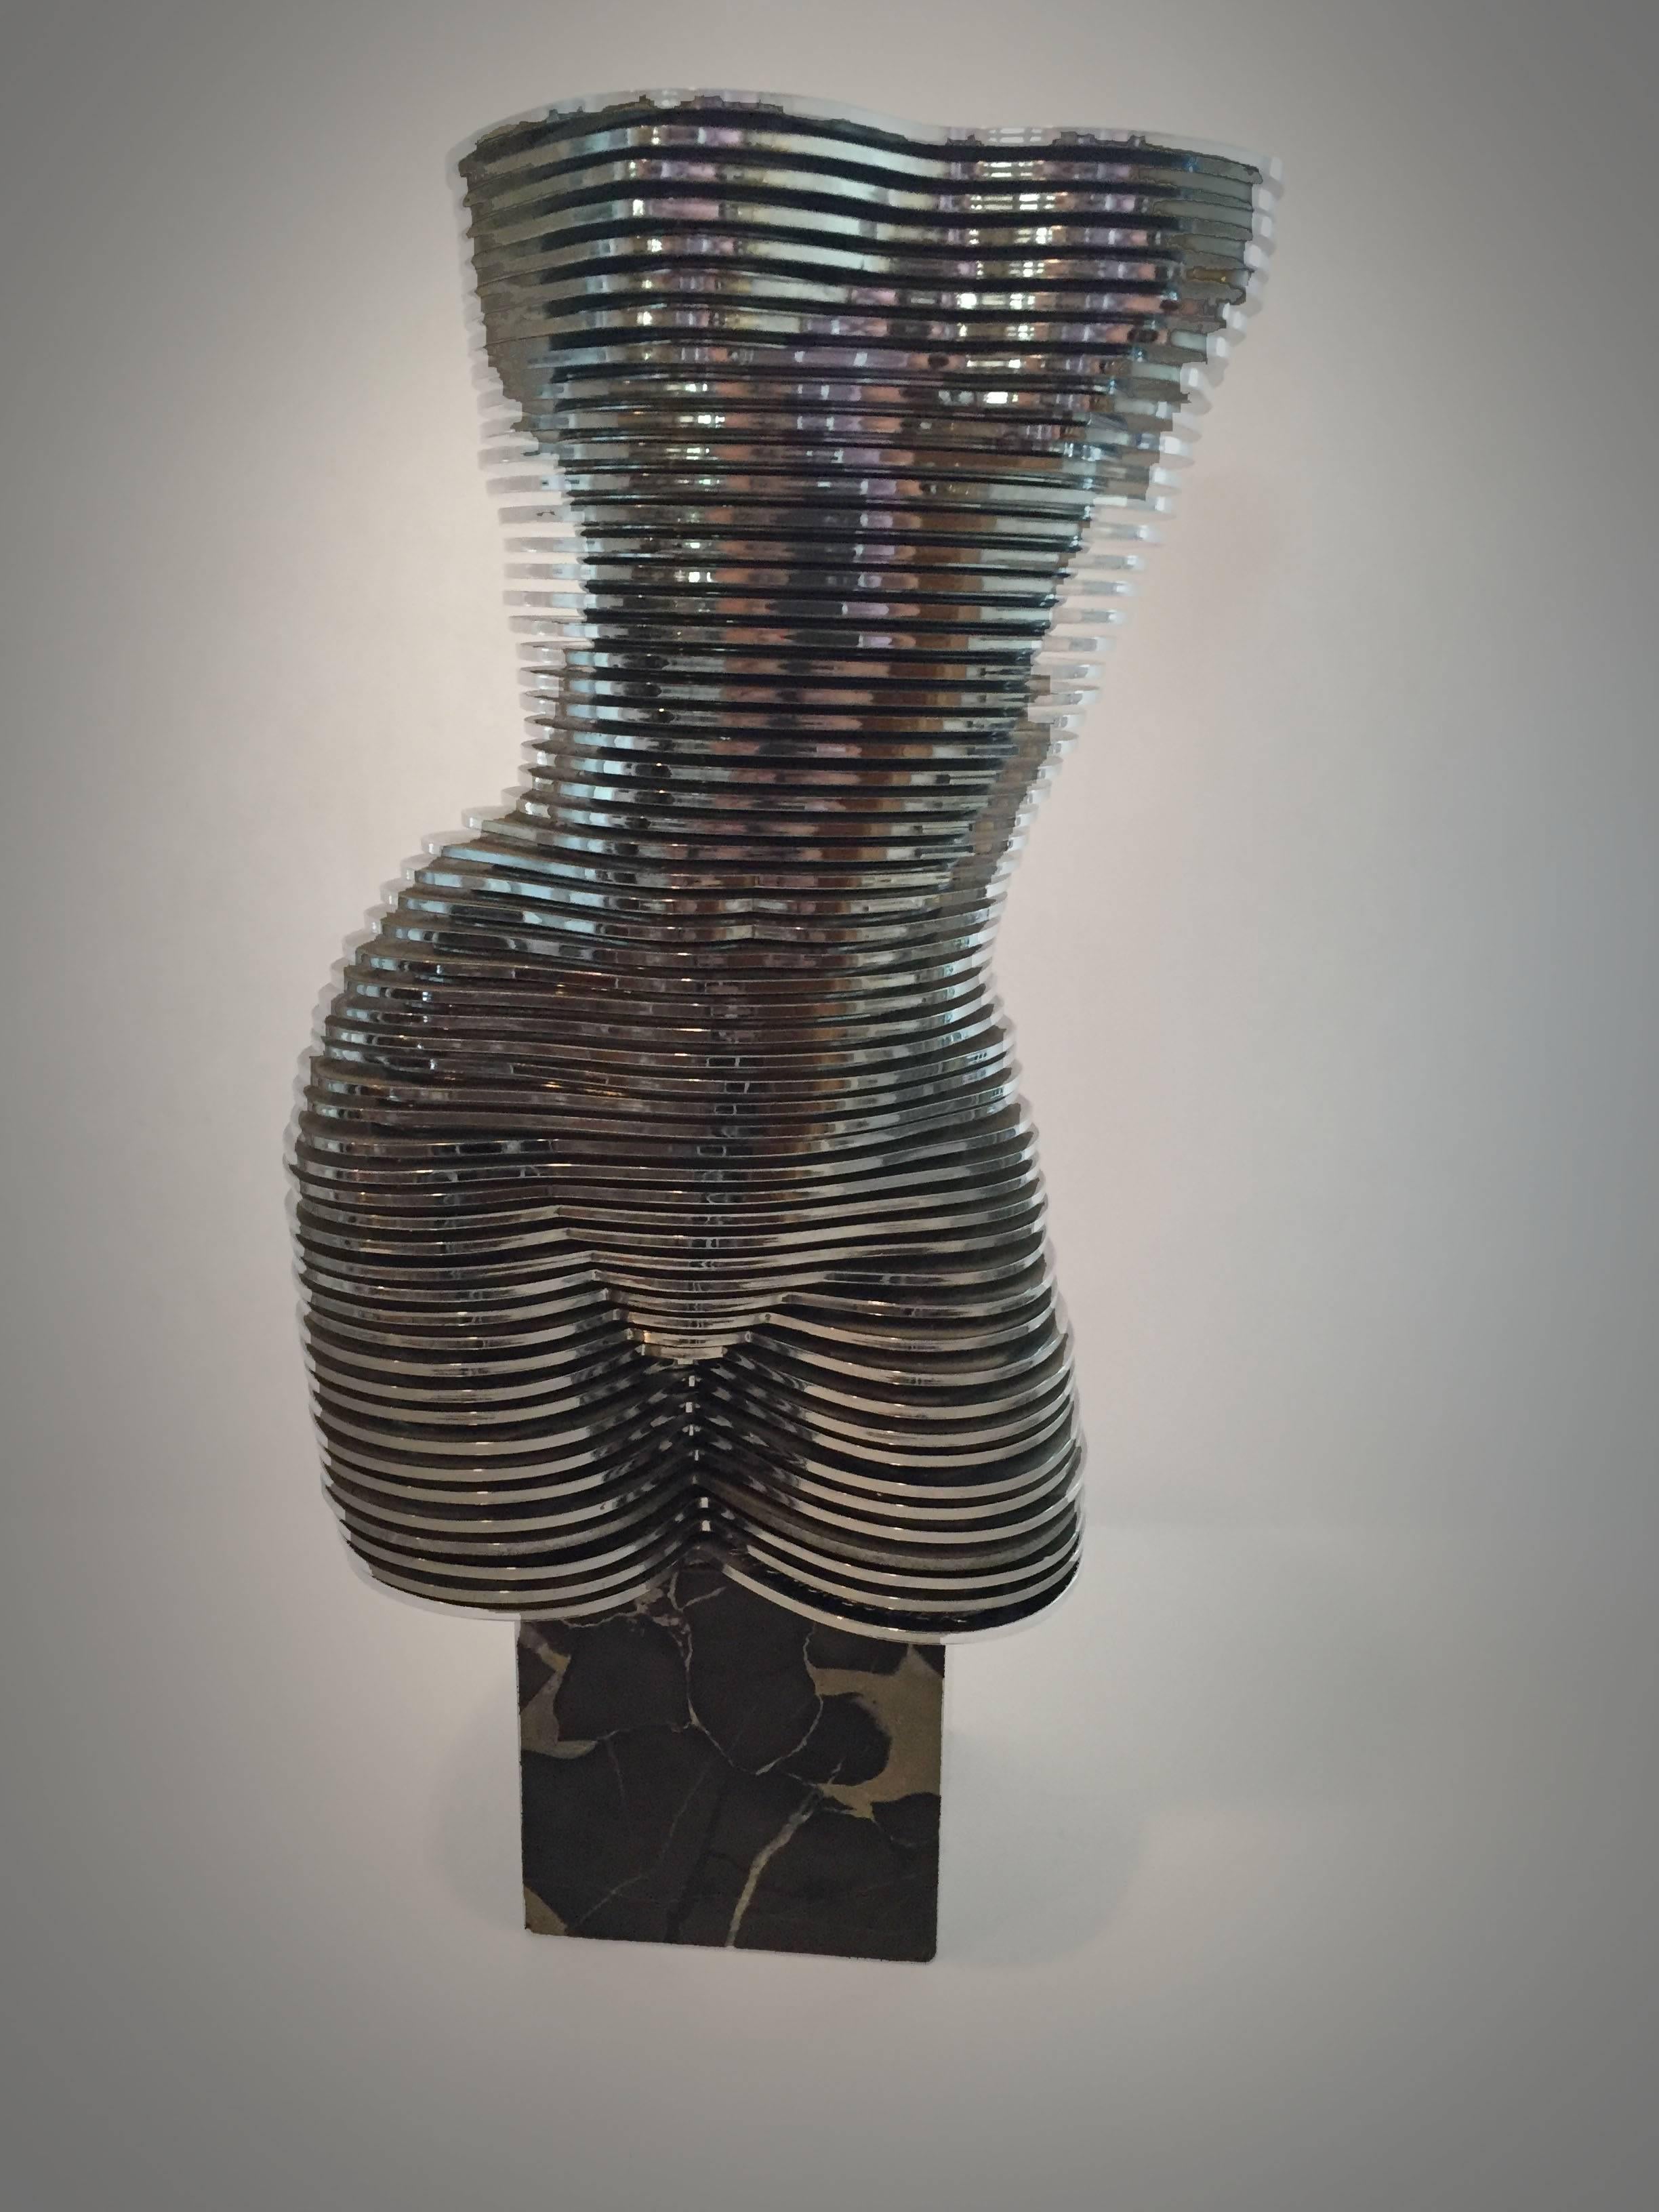 Otto Monestier Figurative Sculpture - Rare 1970s Kinetic Puzzle Sculpture "Eva" Venice Biennale